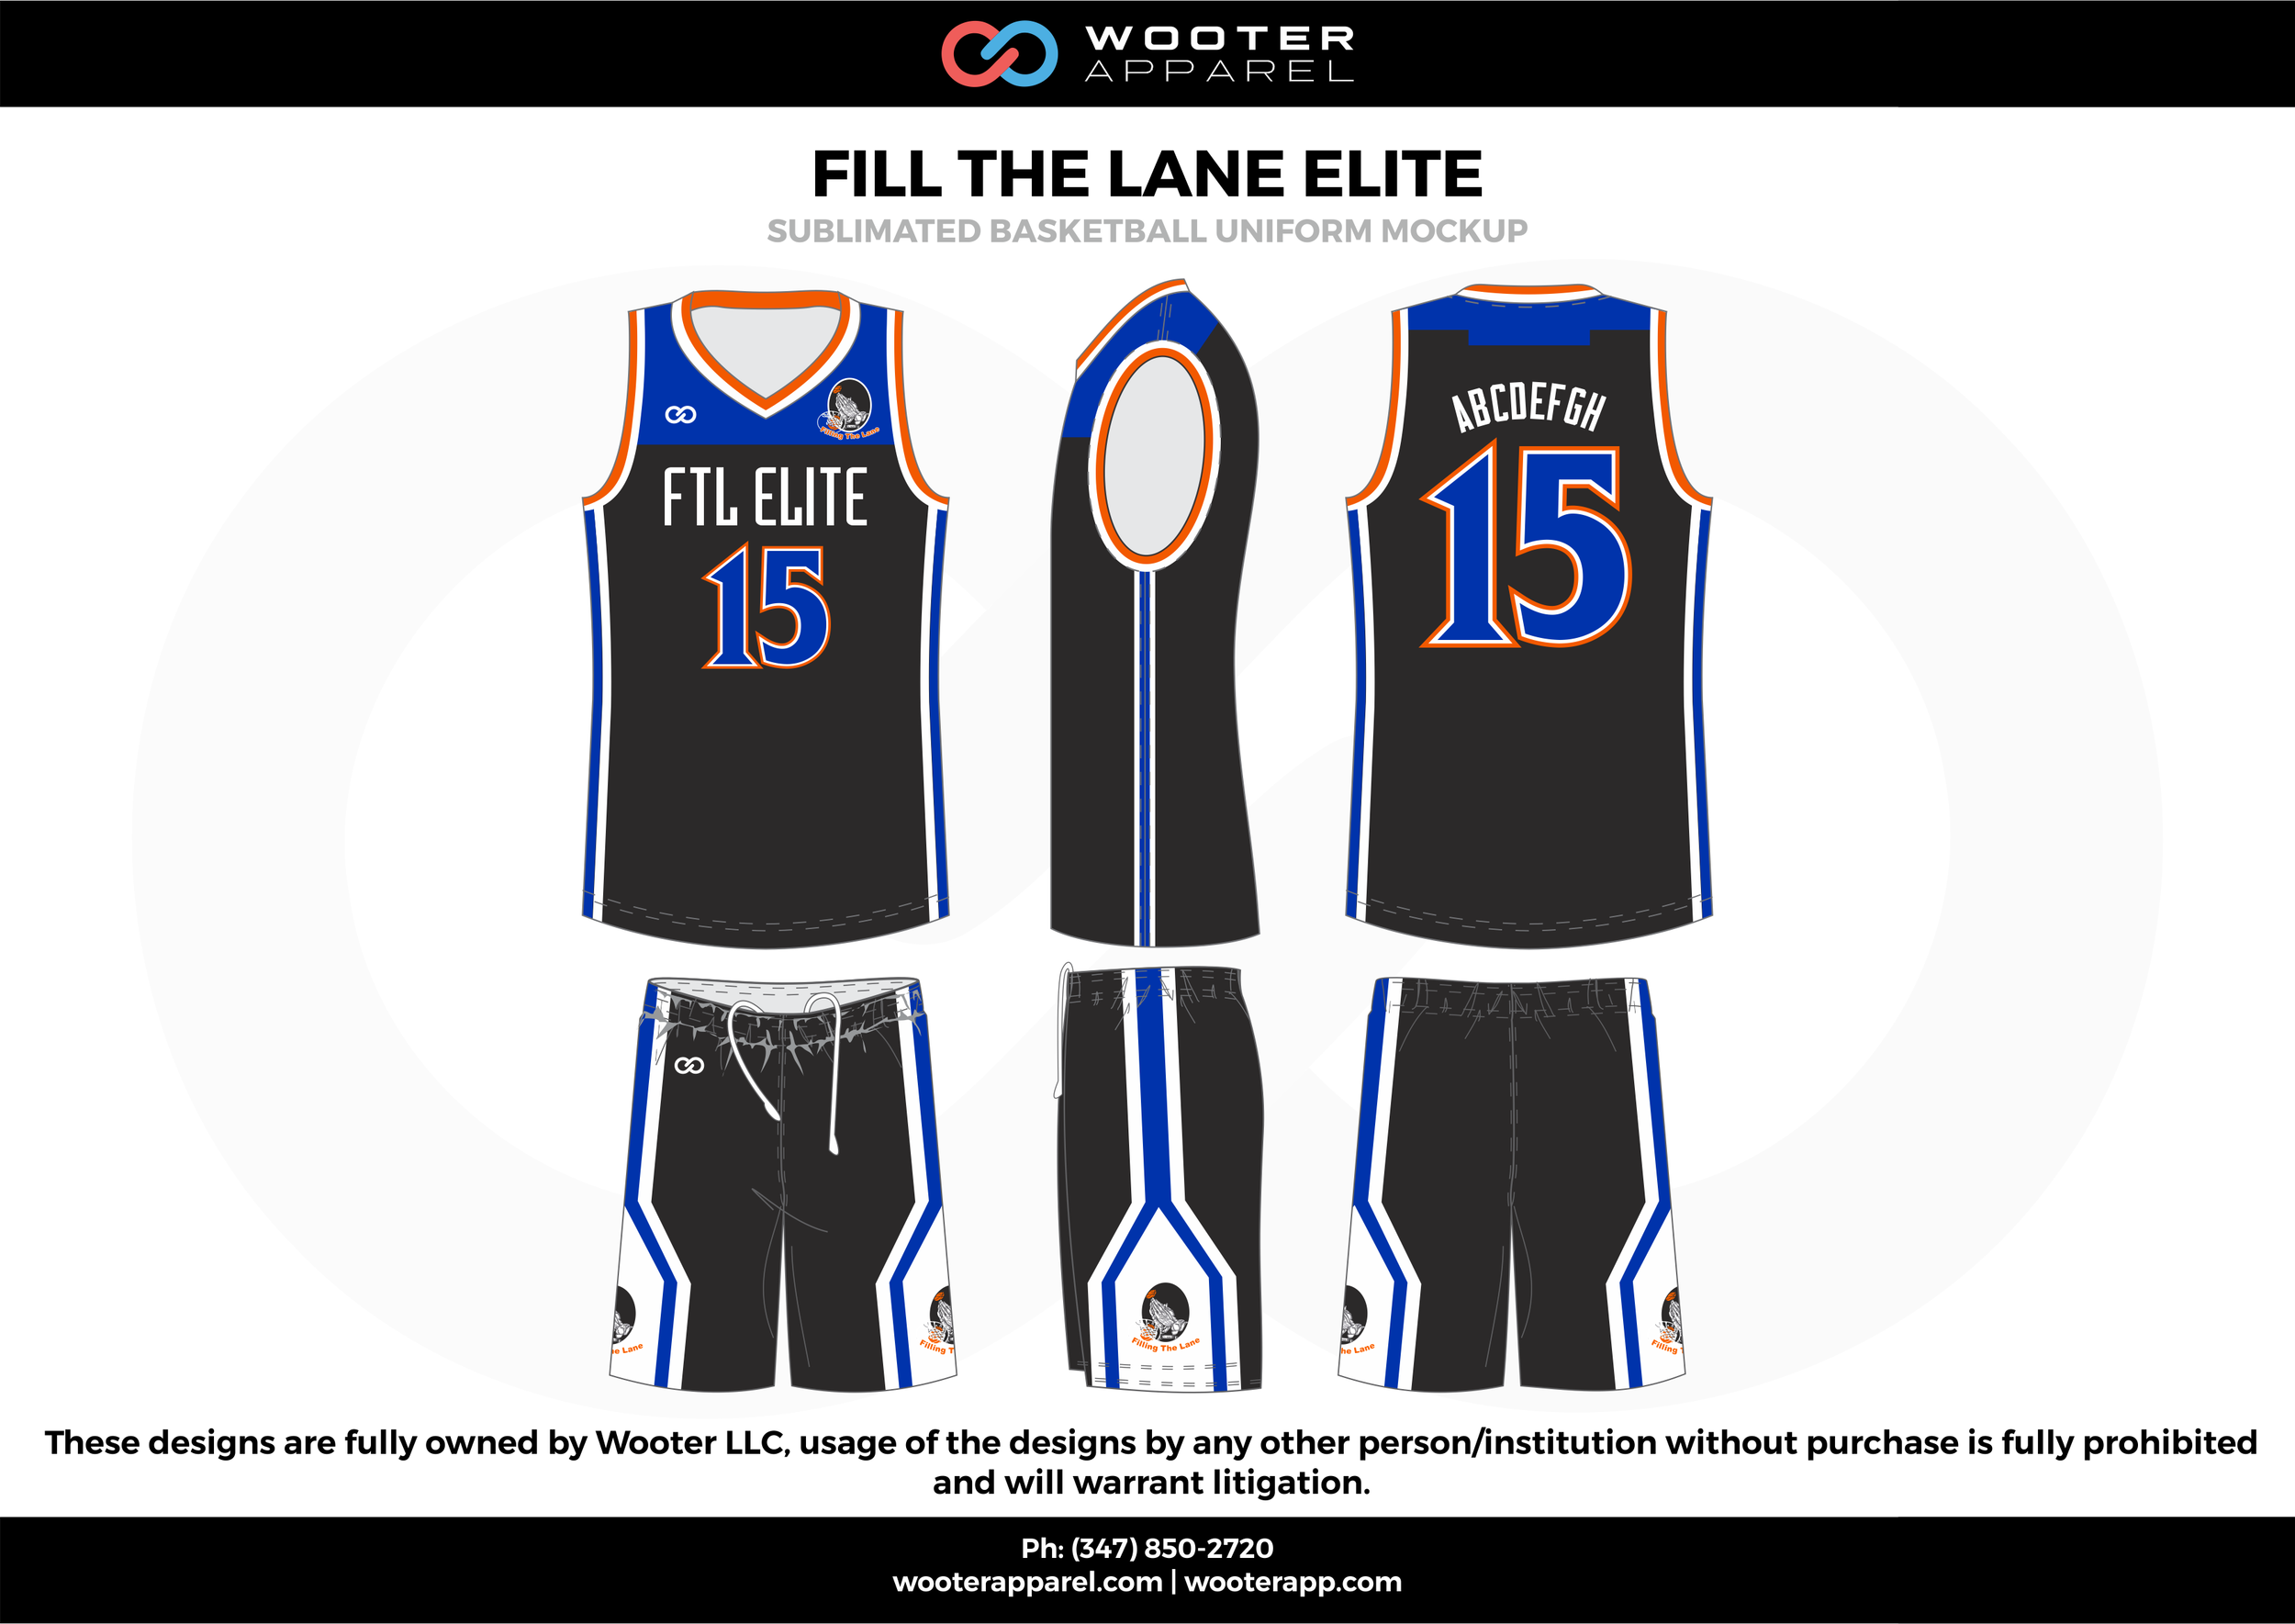 basketball jersey design black and blue